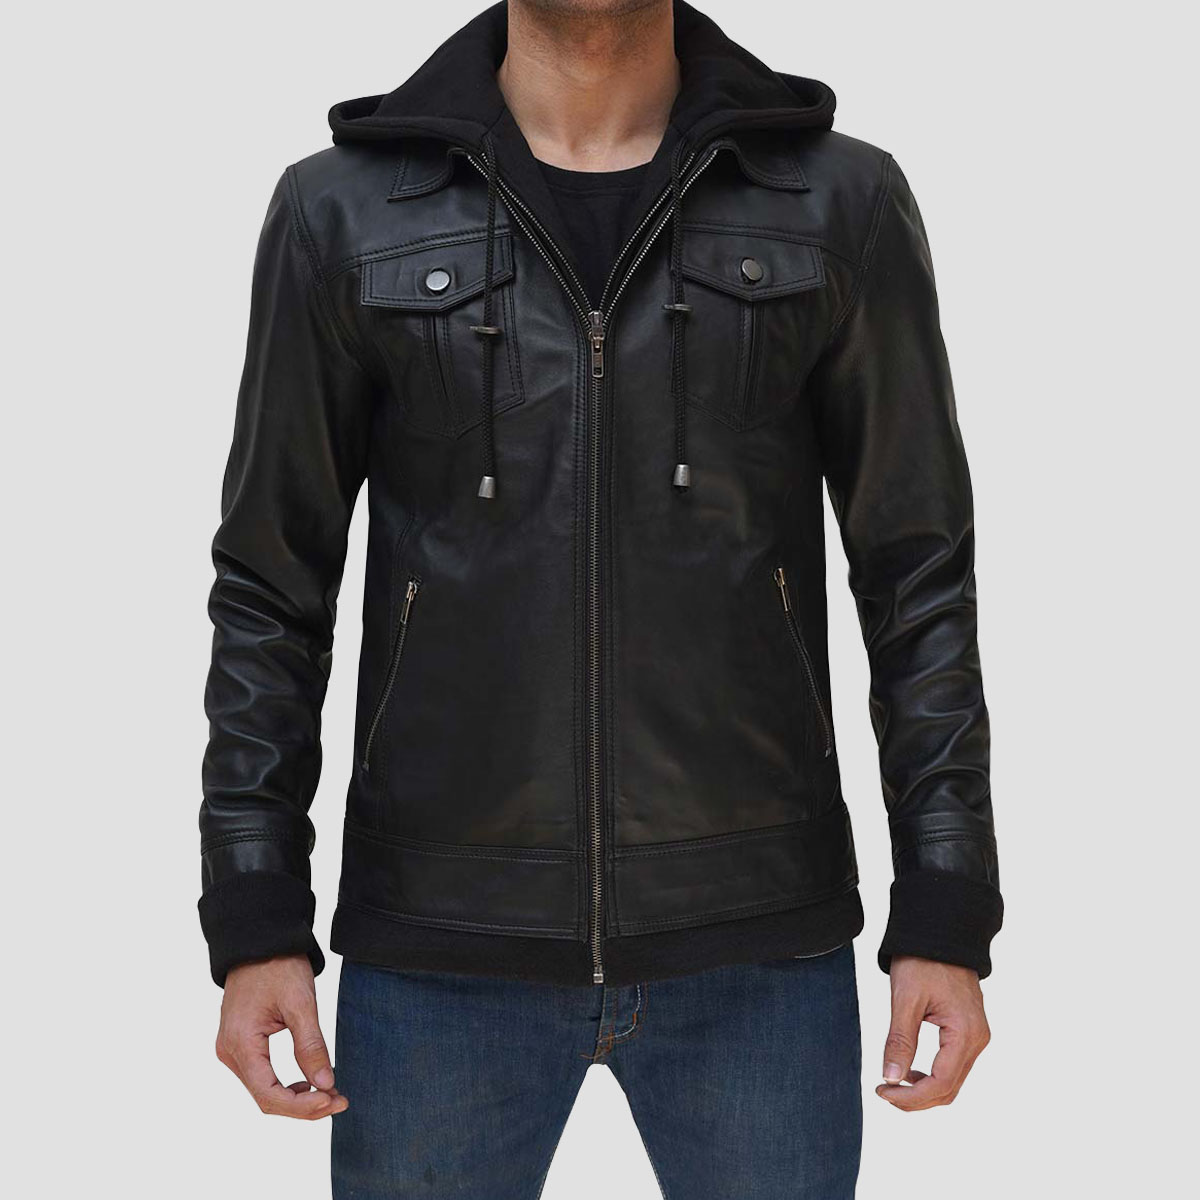 Hooded Black Leather Bomber Jacket - The Vintage Leather